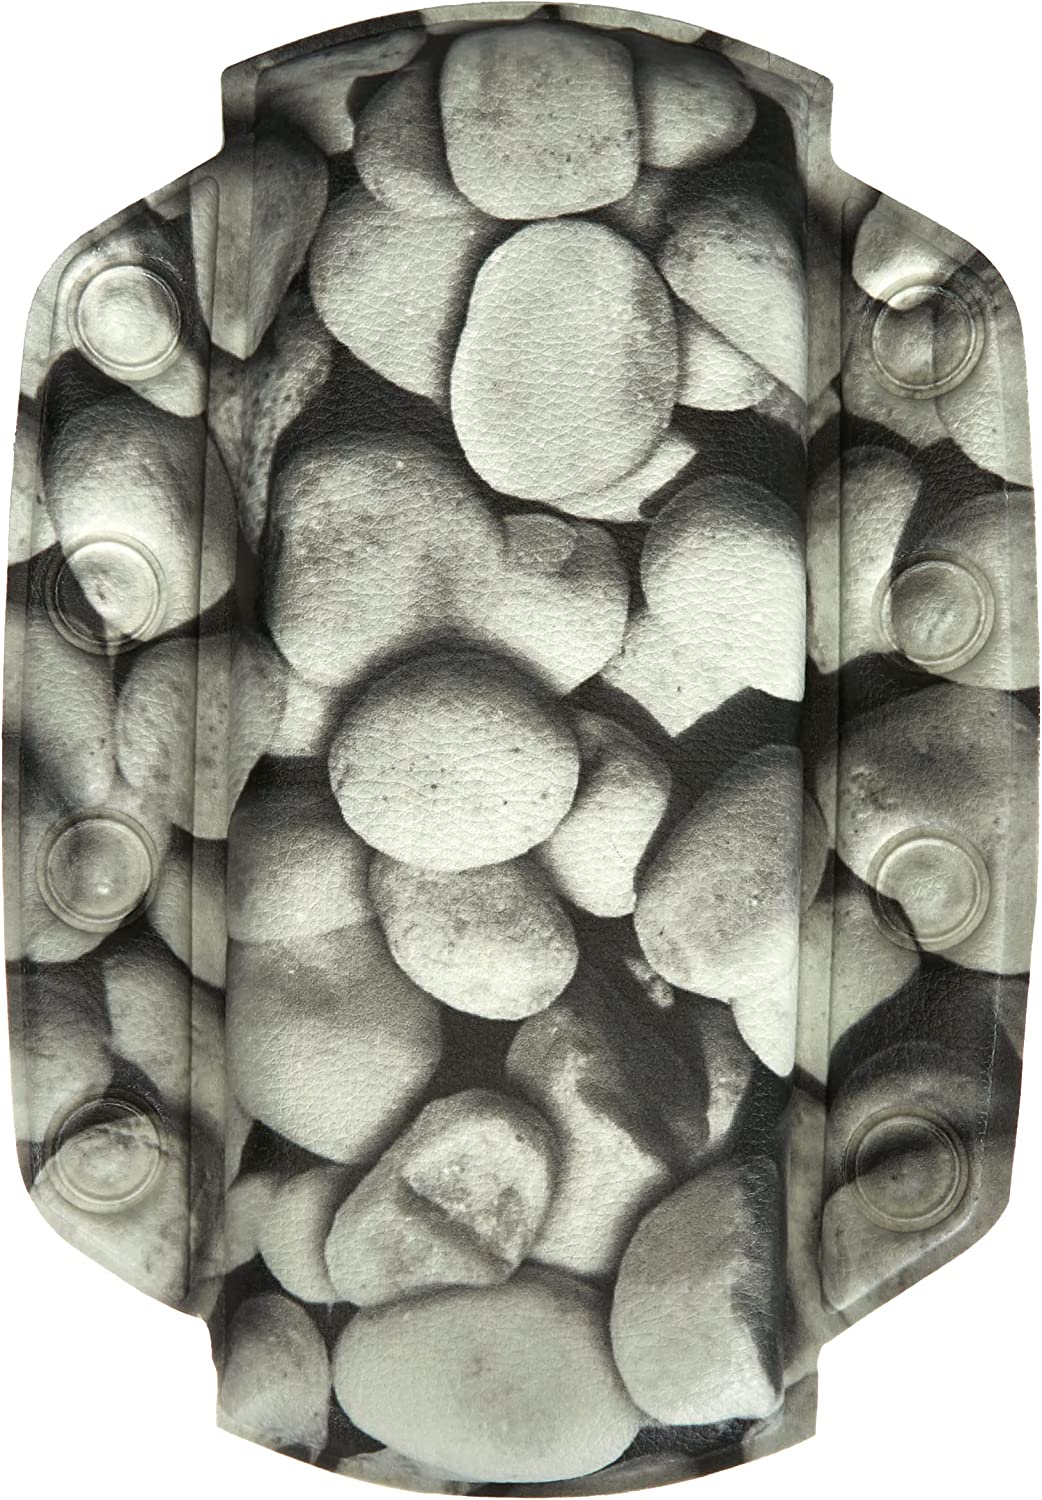 Nackenpolster Stepstone, 32x 22 cm, grau Mehrfarbig nackenpolster 32x22 cm